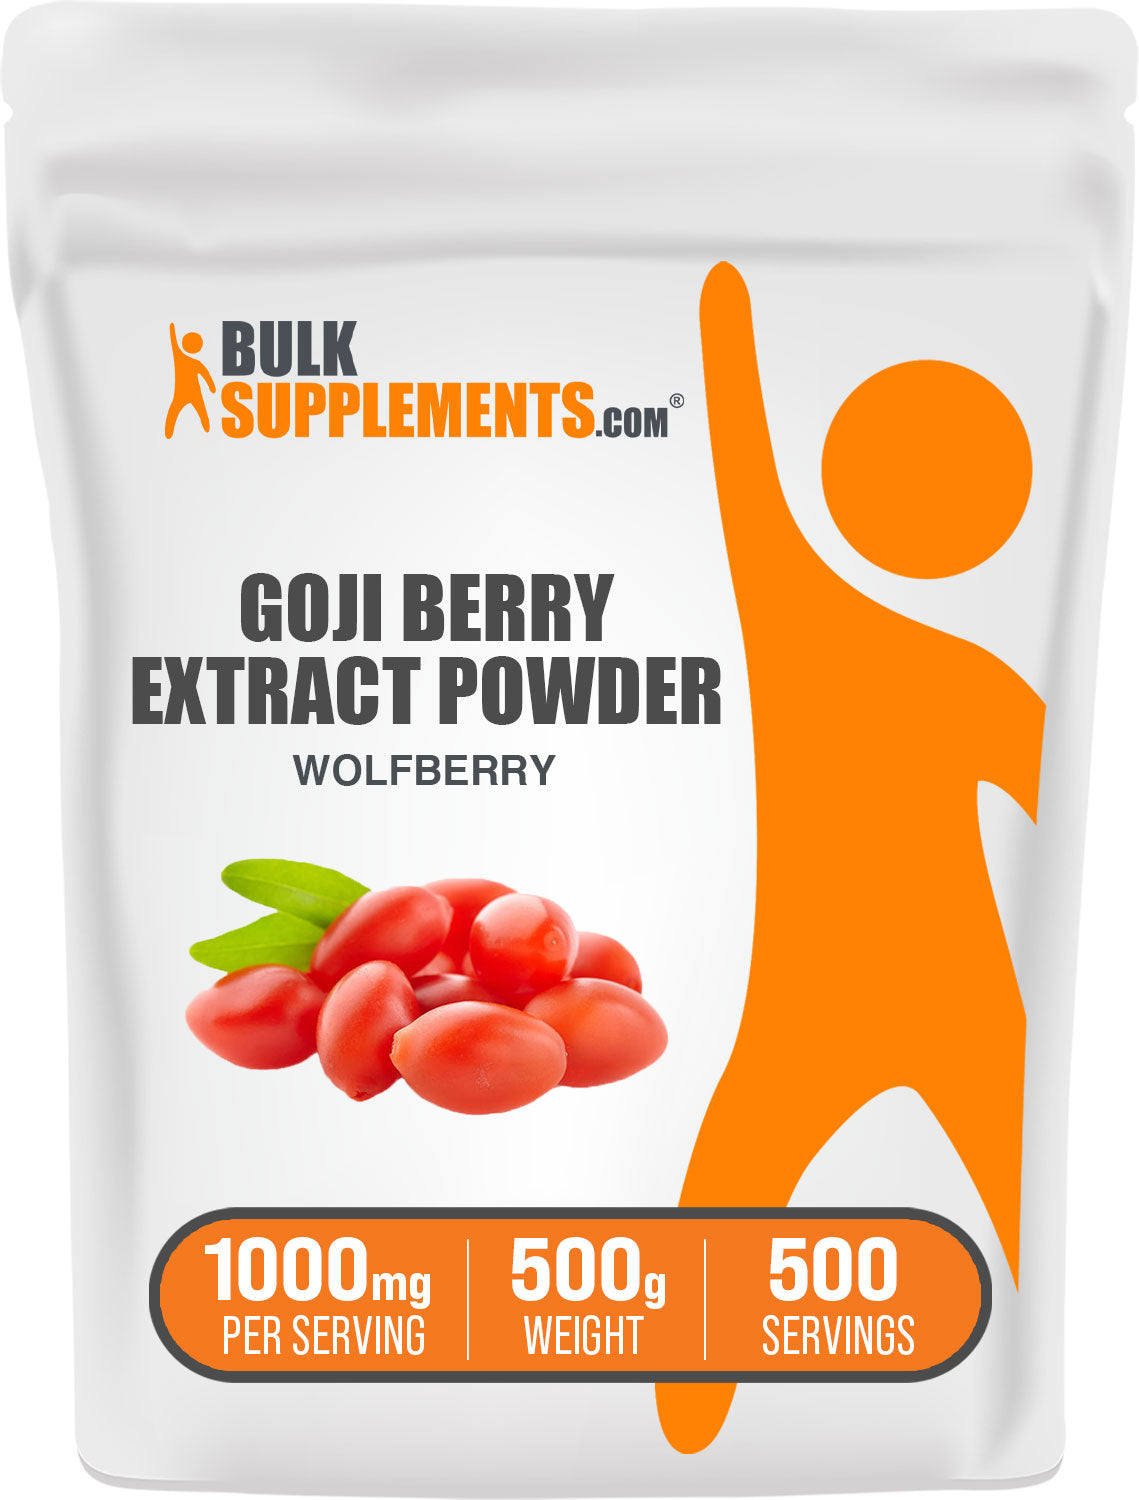 BulkSupplements.com Goji Berry Extract Powder Wolfberry 500g bag